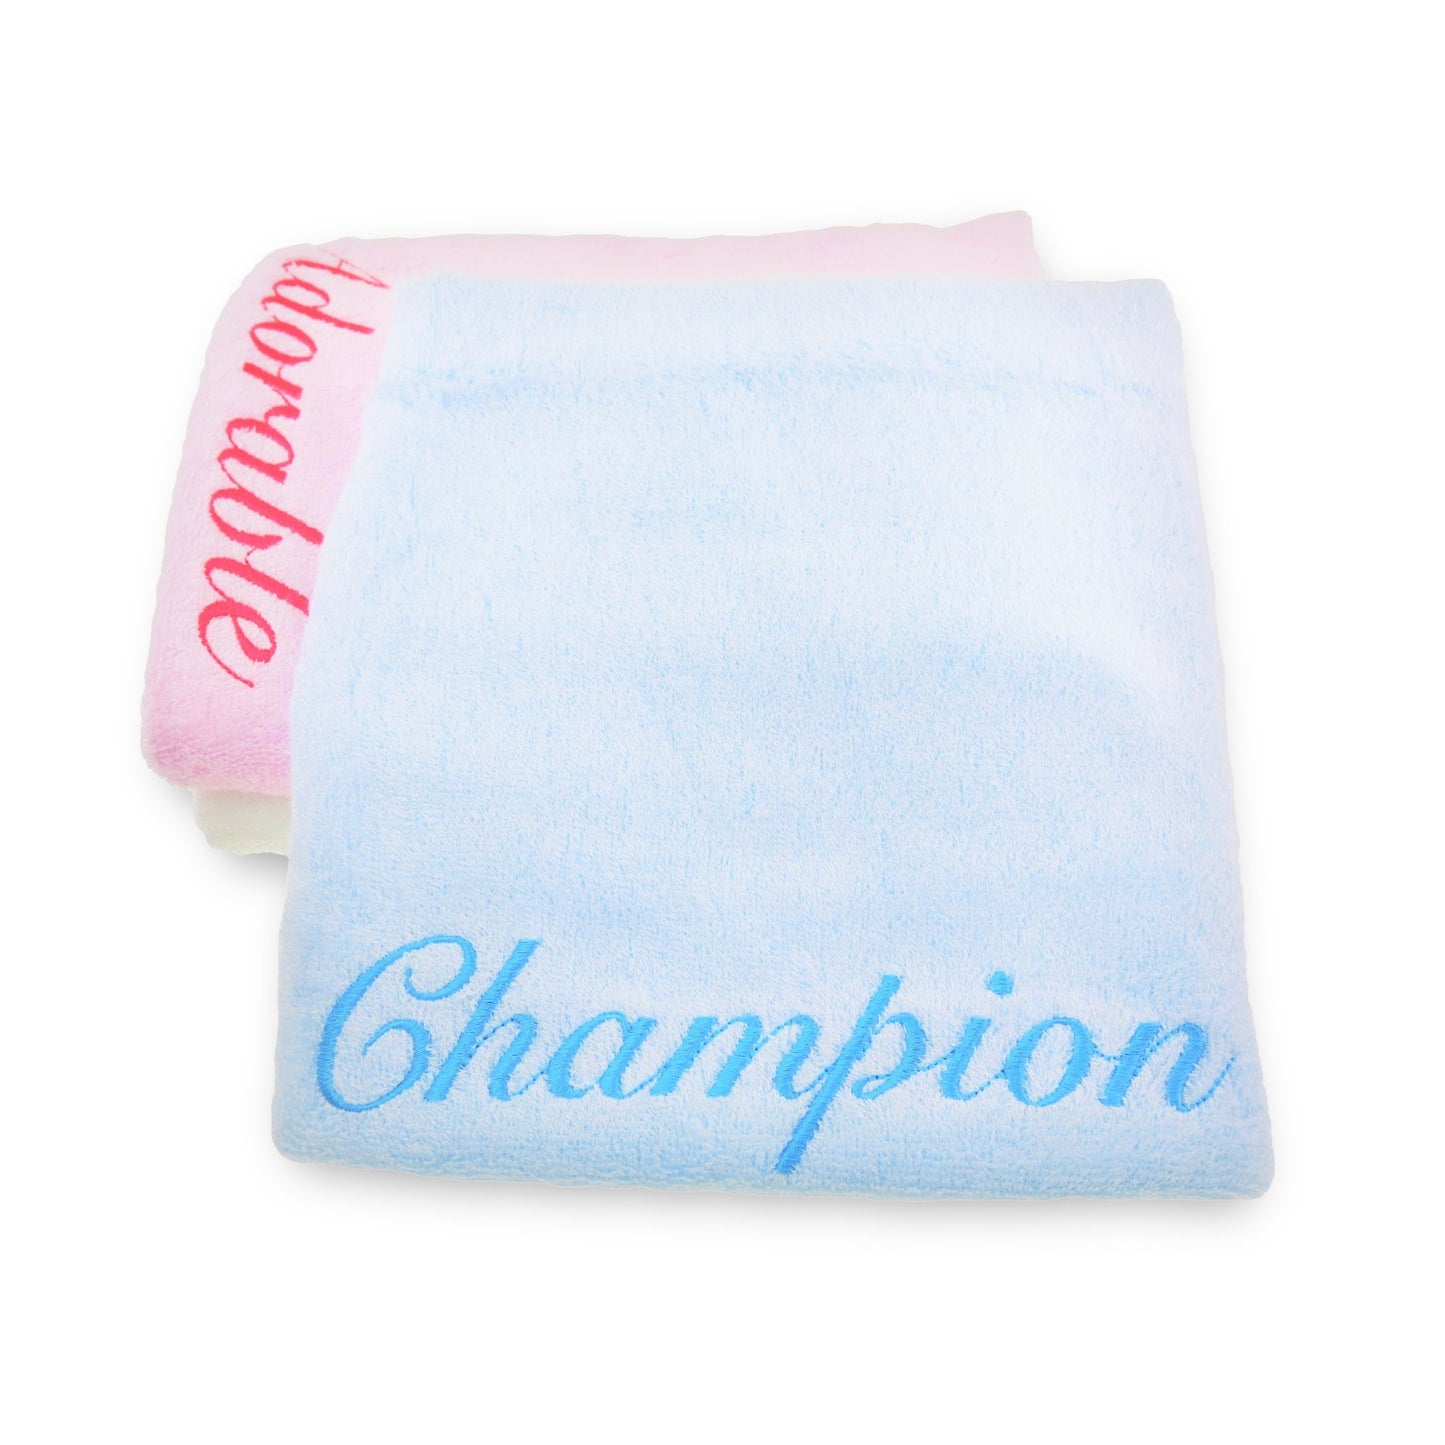 Champion - Embroidered Premium Bamboo Towel (120x60 cm)